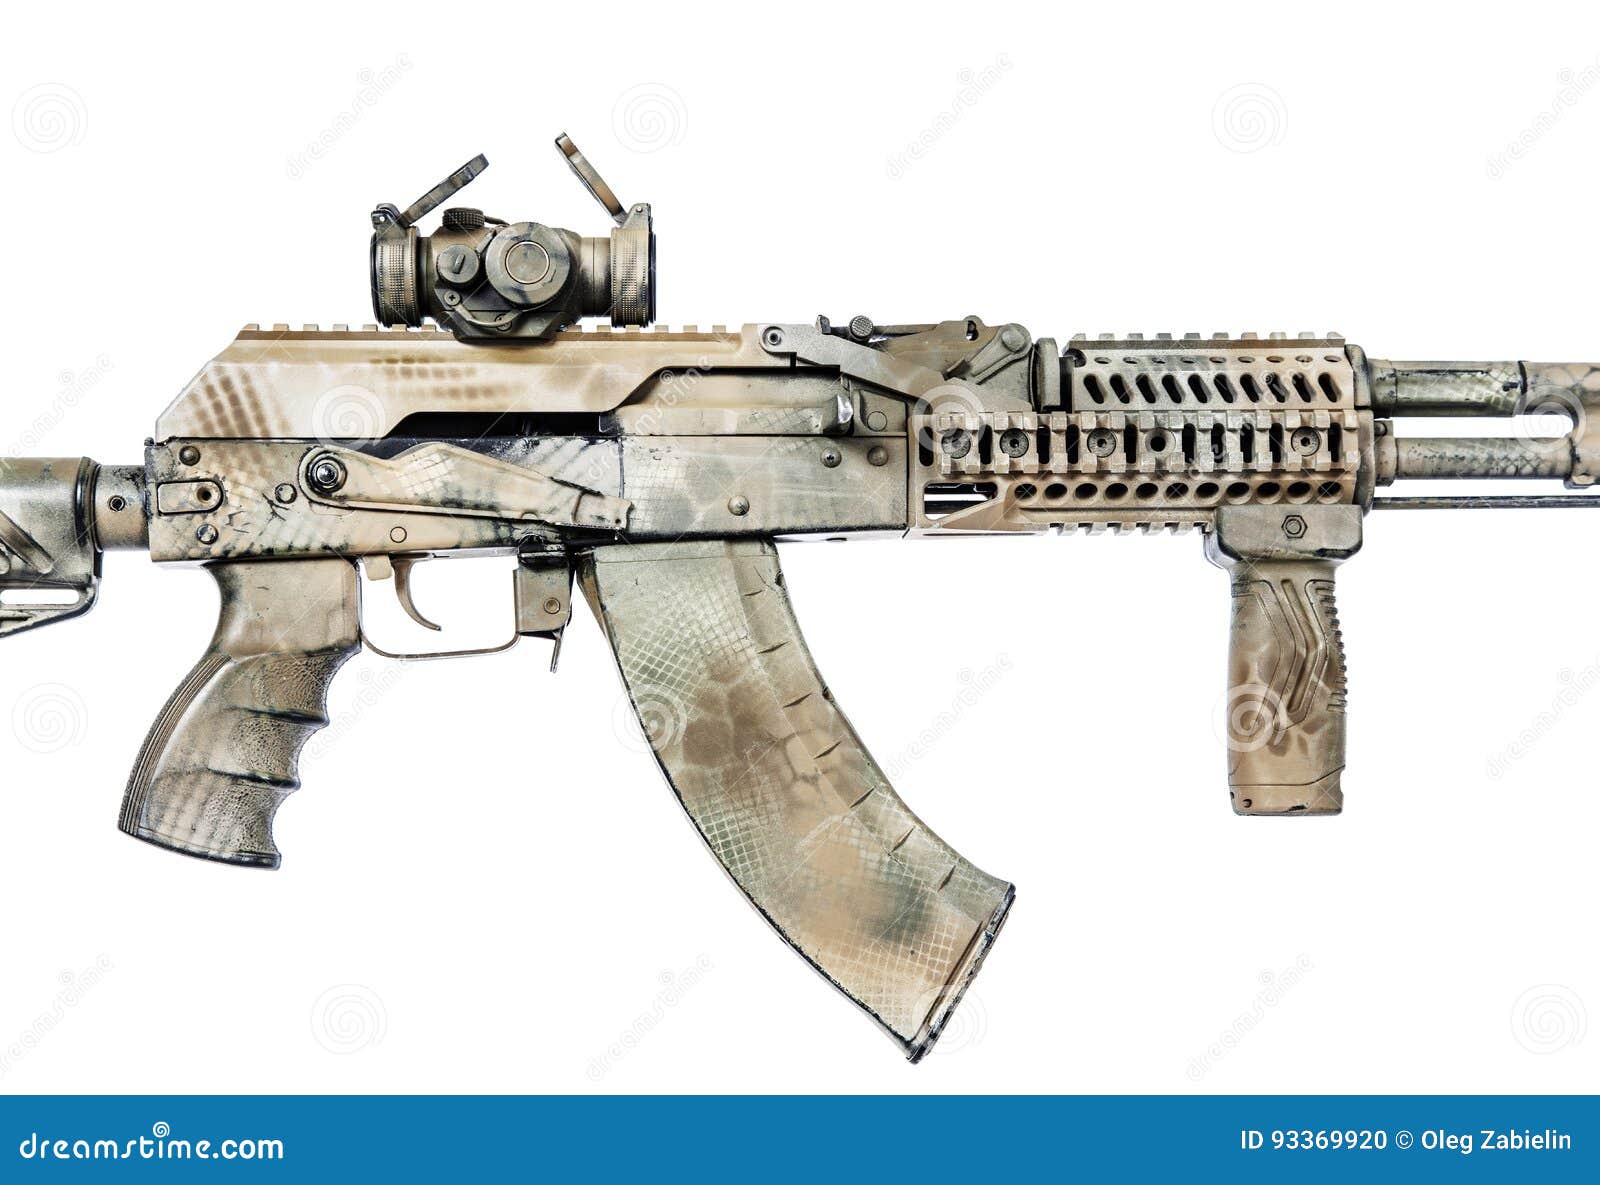 kalashnikov assault rifle on white background